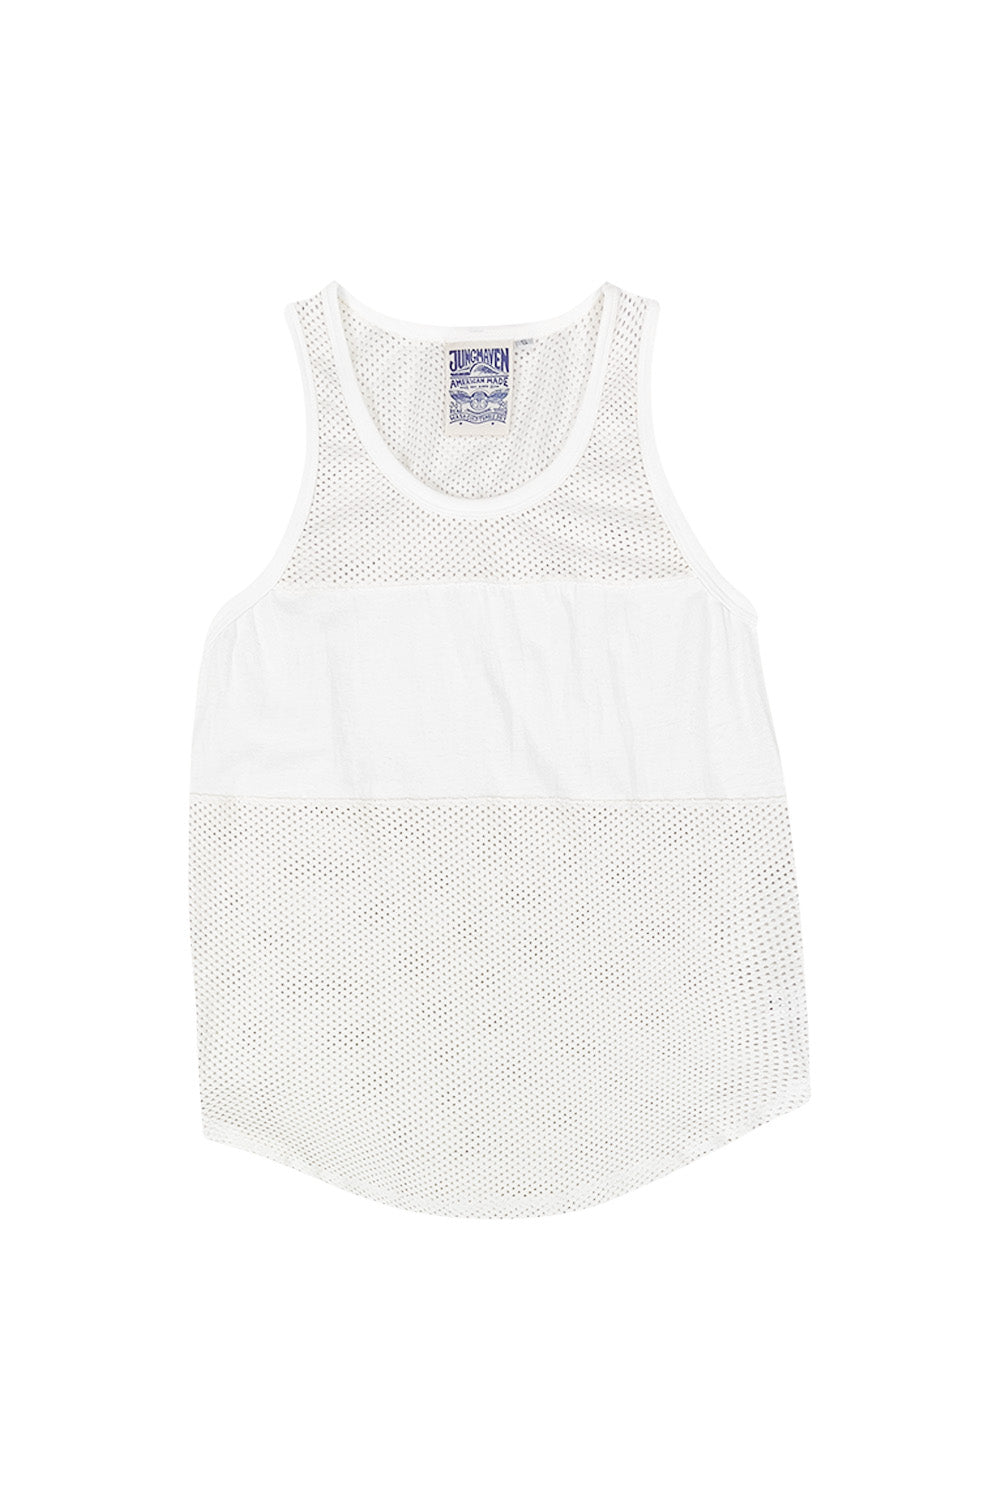 Marathon Mesh Tank | Jungmaven Hemp Clothing & Accessories / Color: Washed White